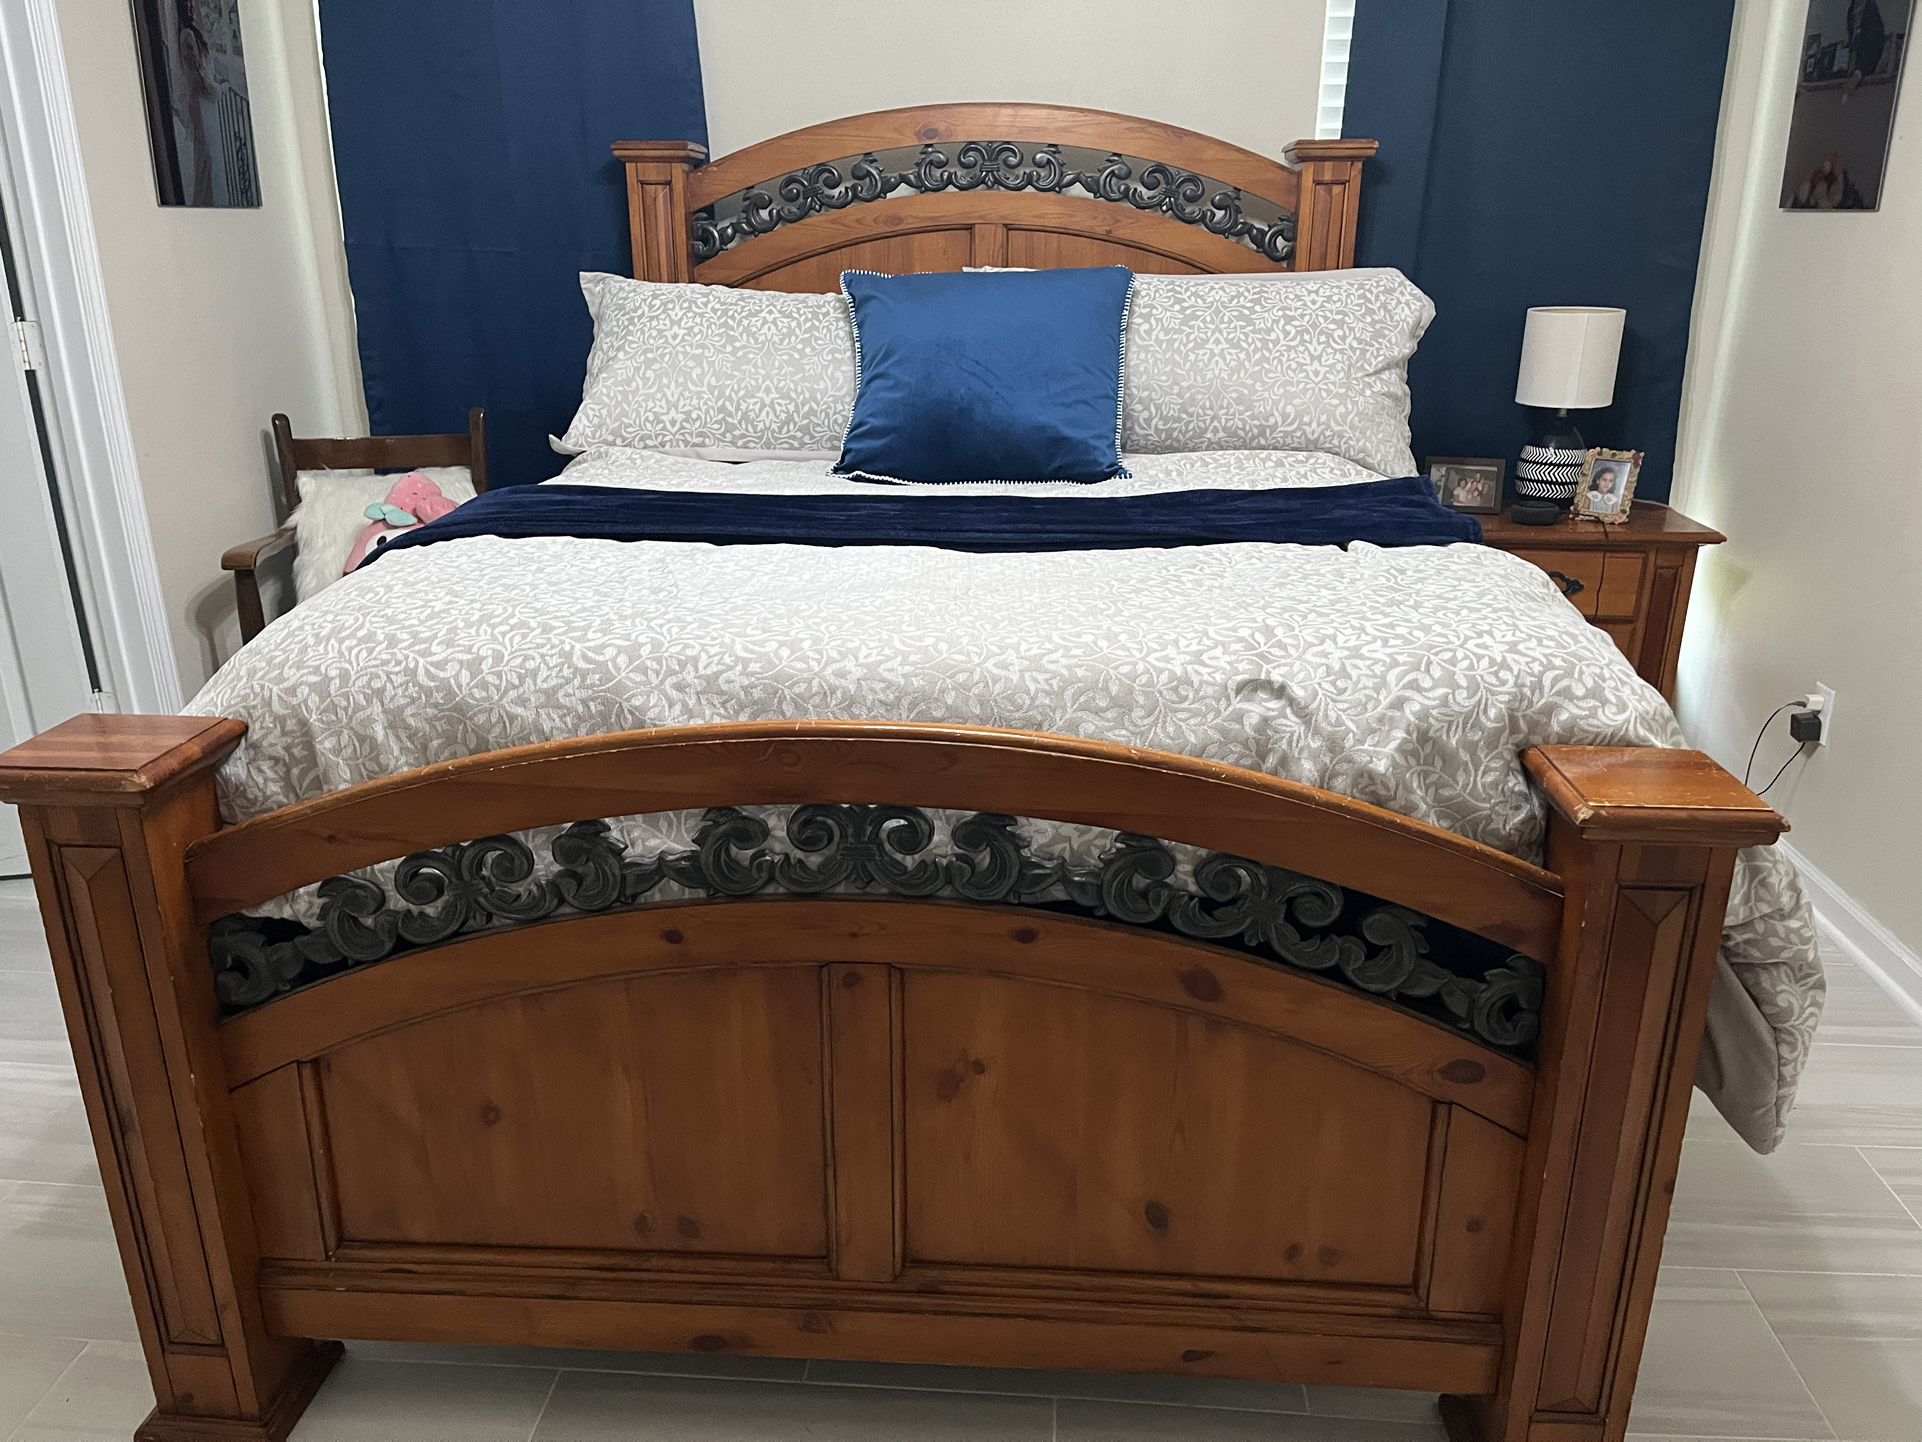 Queen bedroom Set With Nightstand And Large Dresser